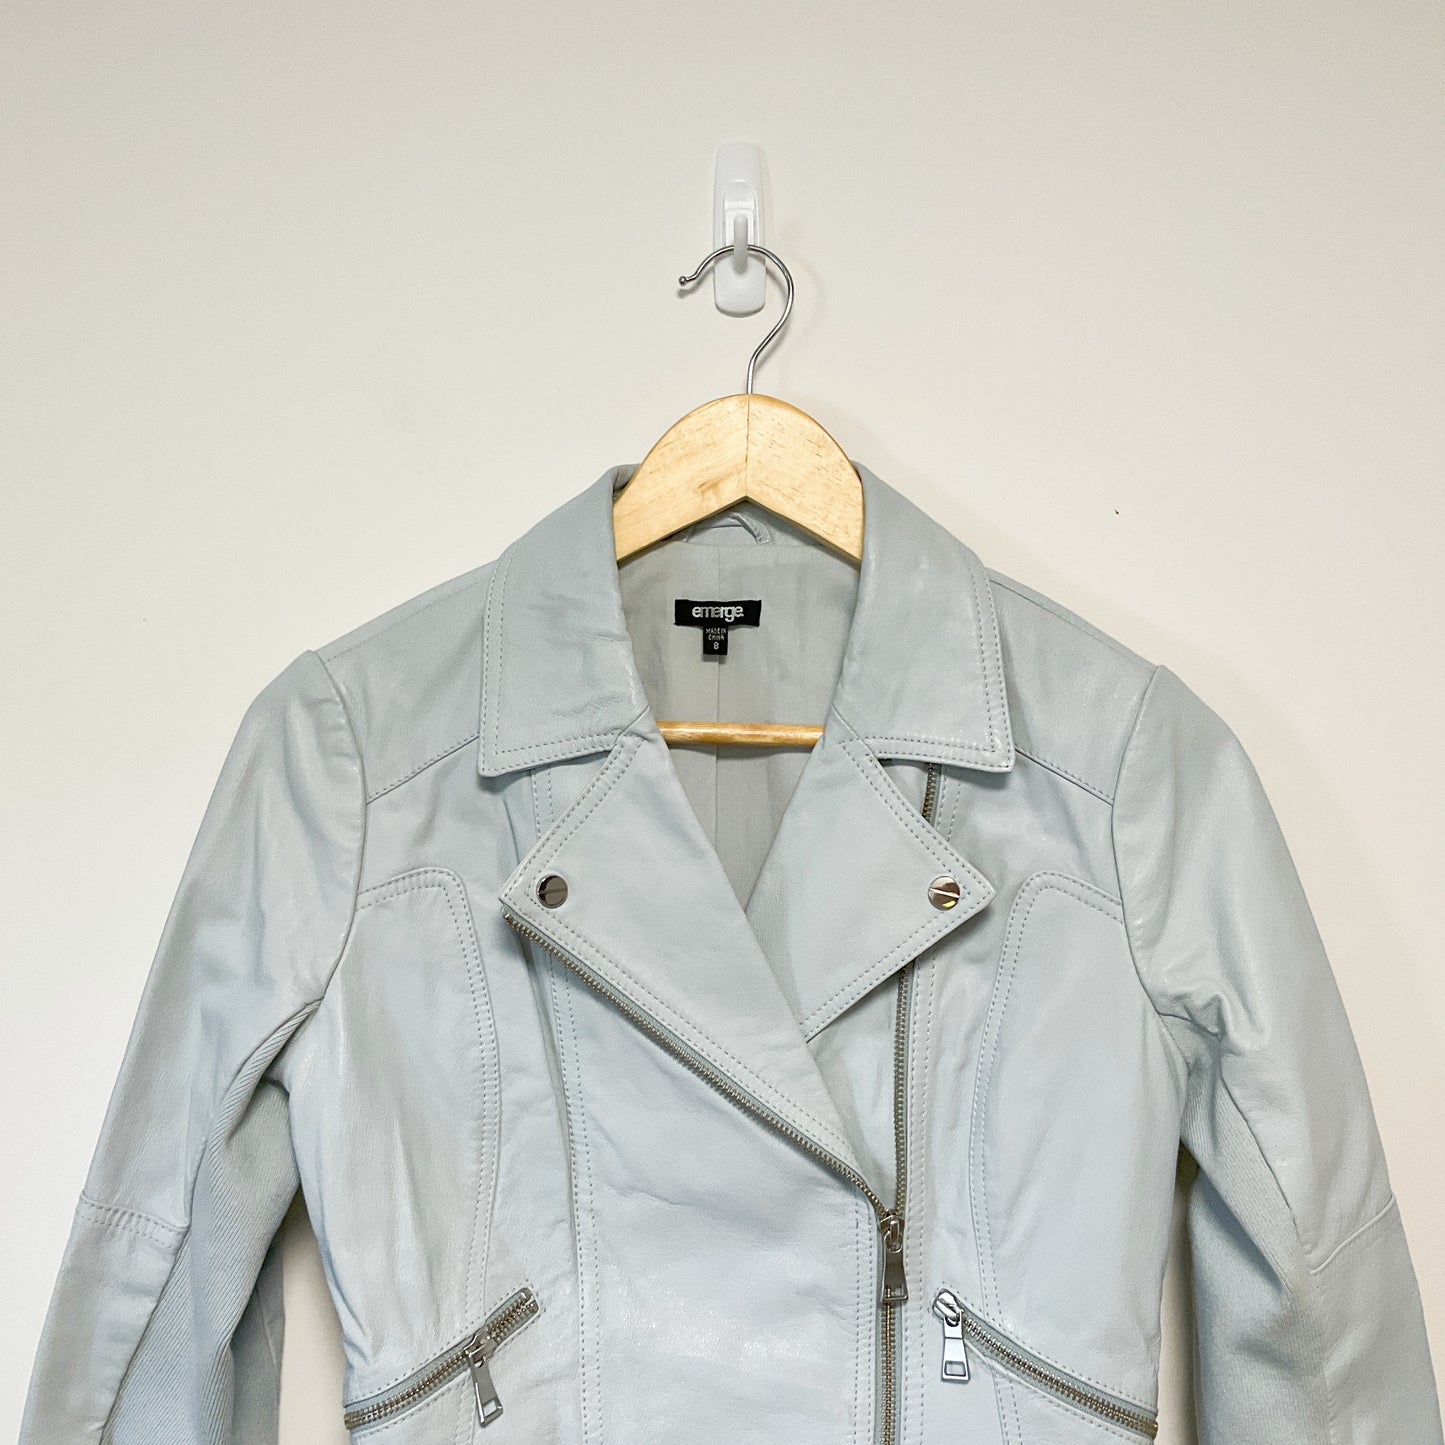 Emerge - Zip Up Leather Jacket